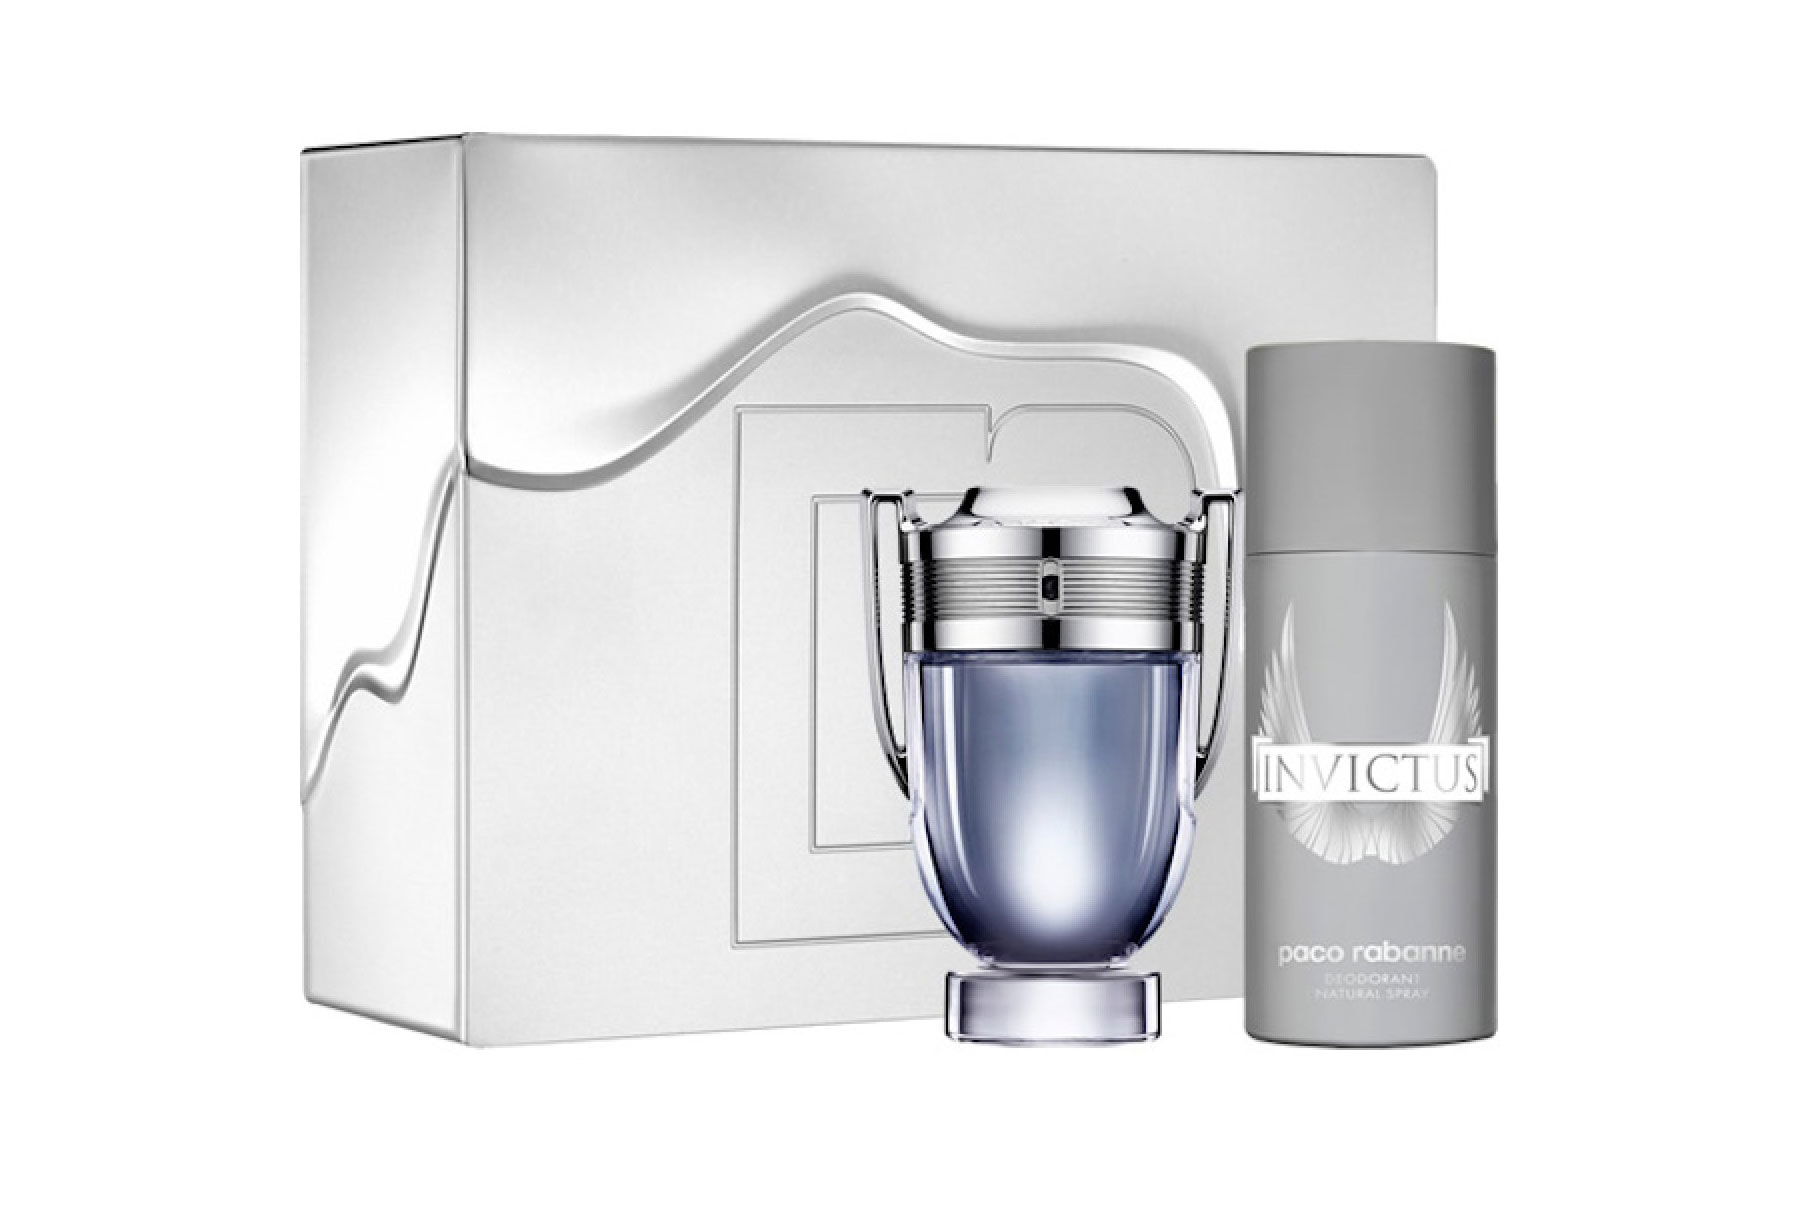 Invictus Gift Set » Paco Rabanne » The Parfumerie » Sri Lanka